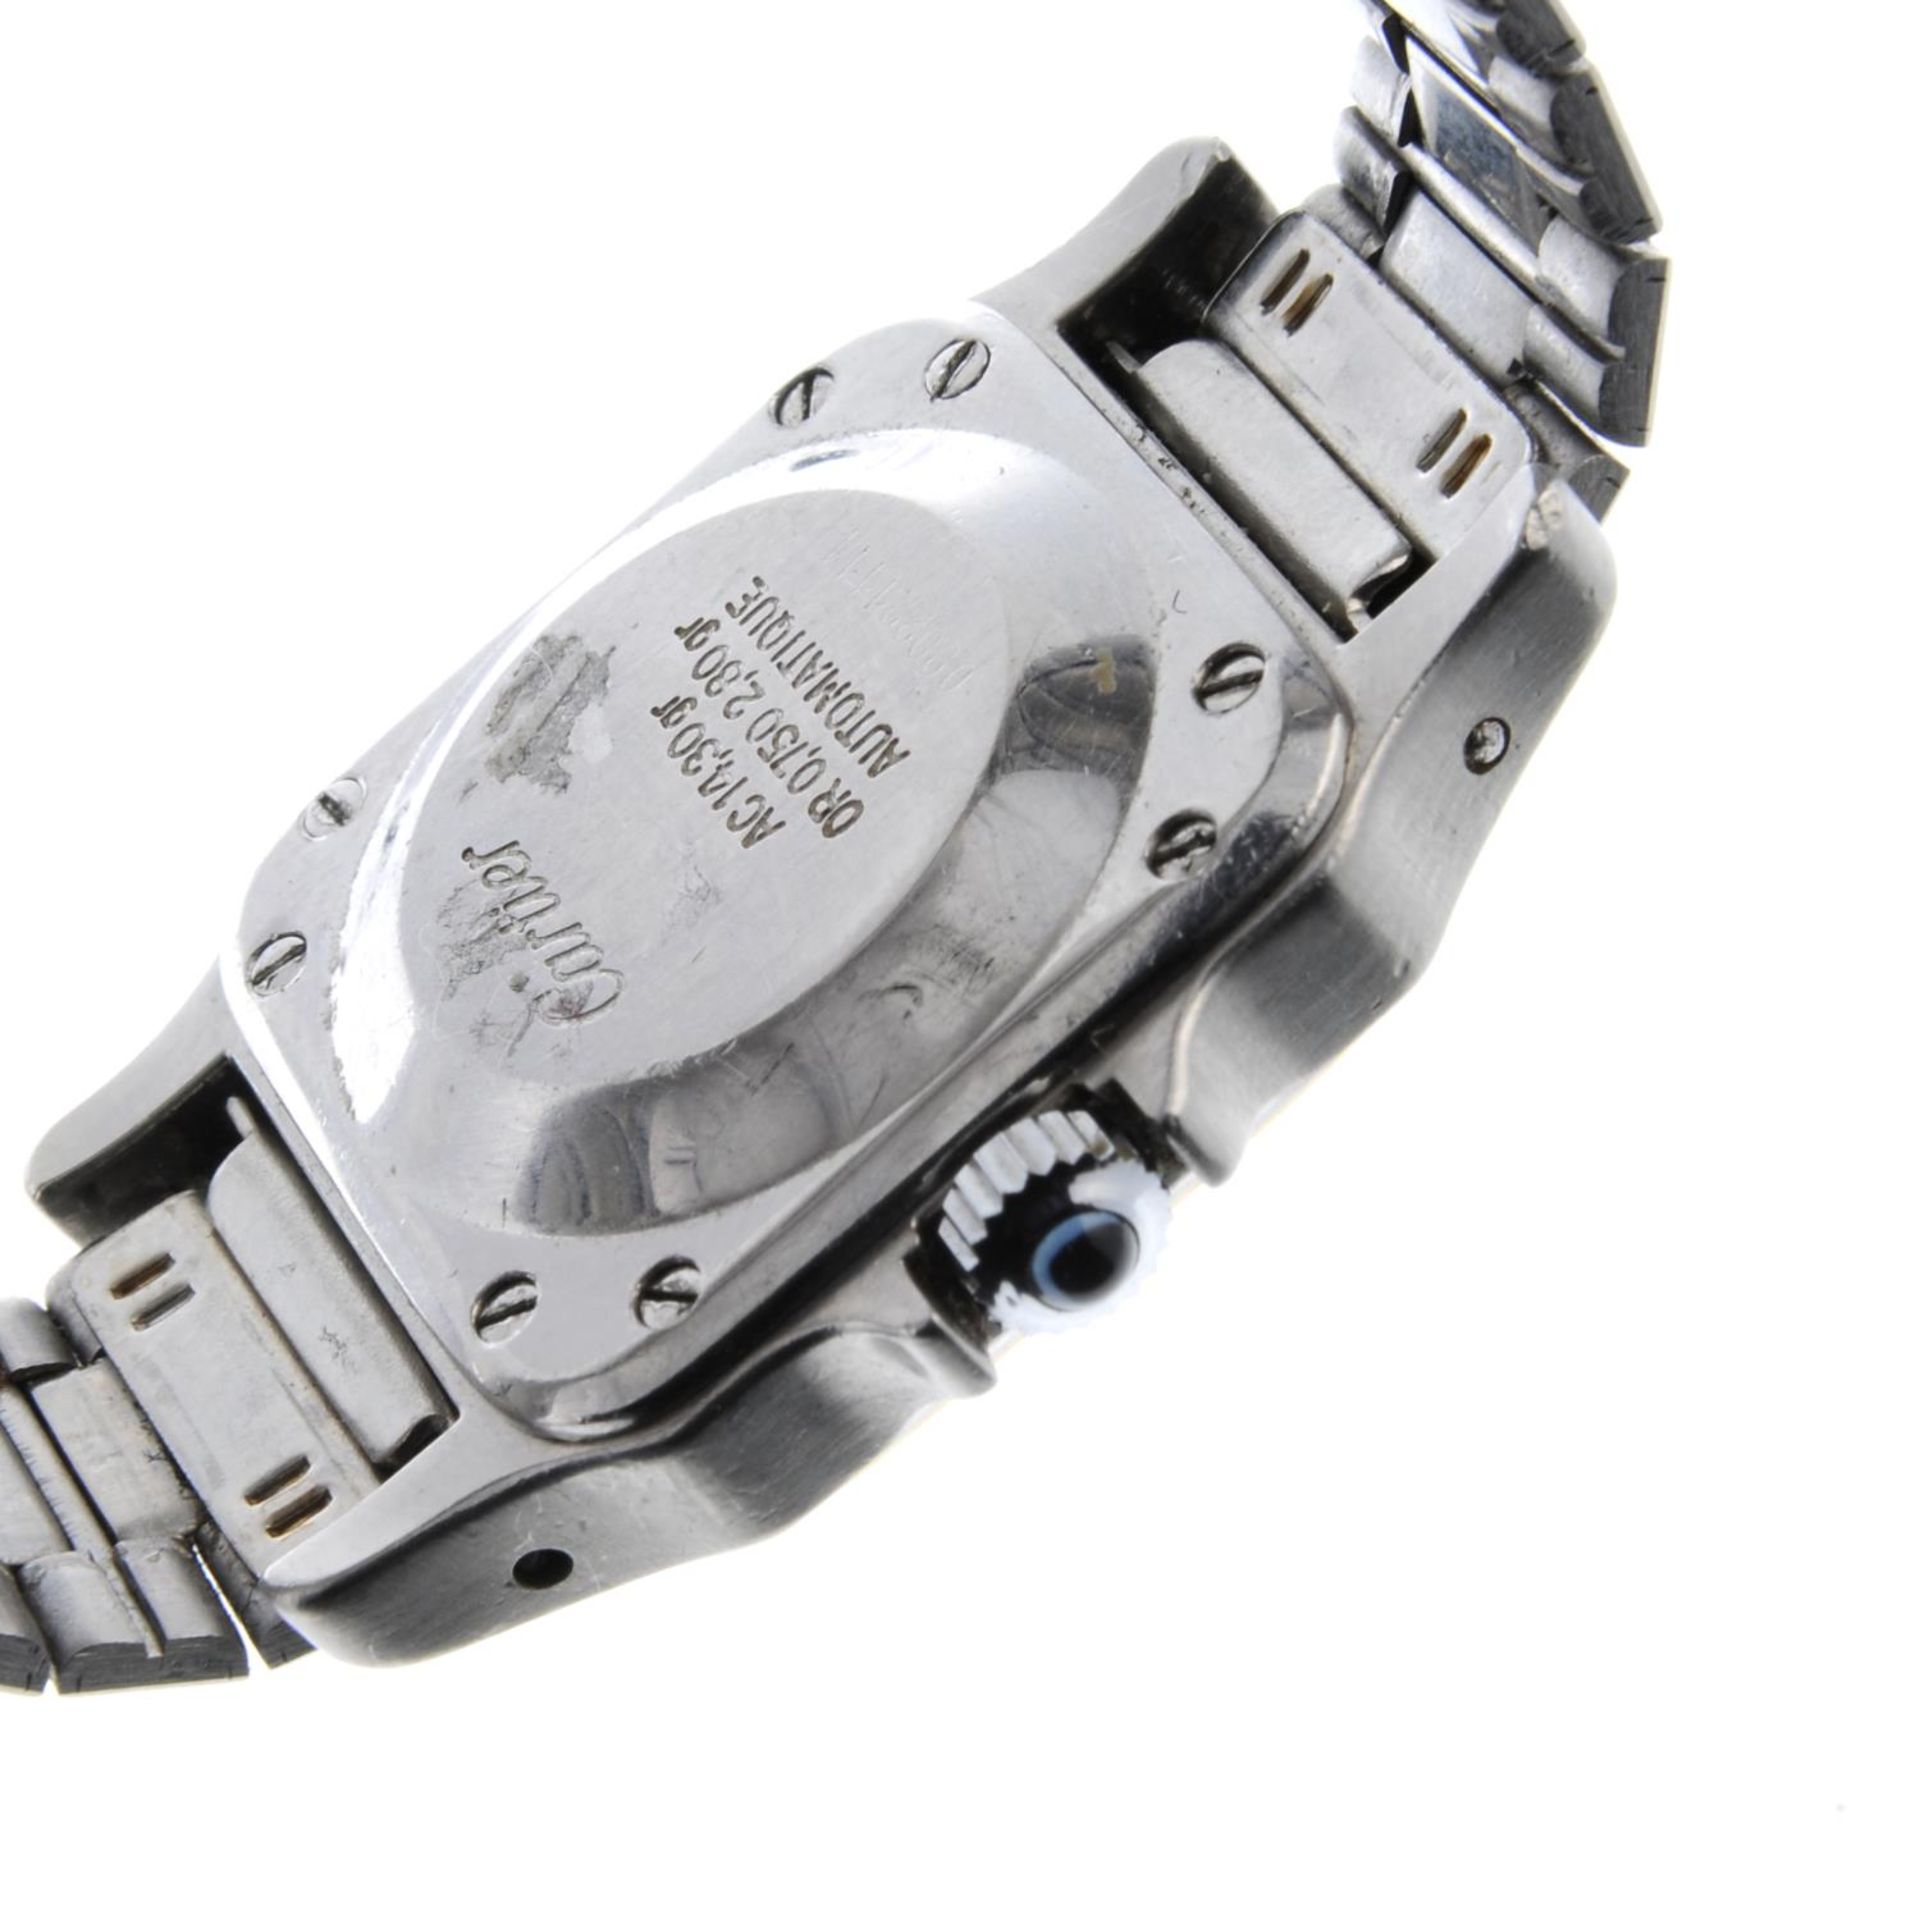 CARTIER - a lady's Santos bracelet watch. - Image 2 of 4